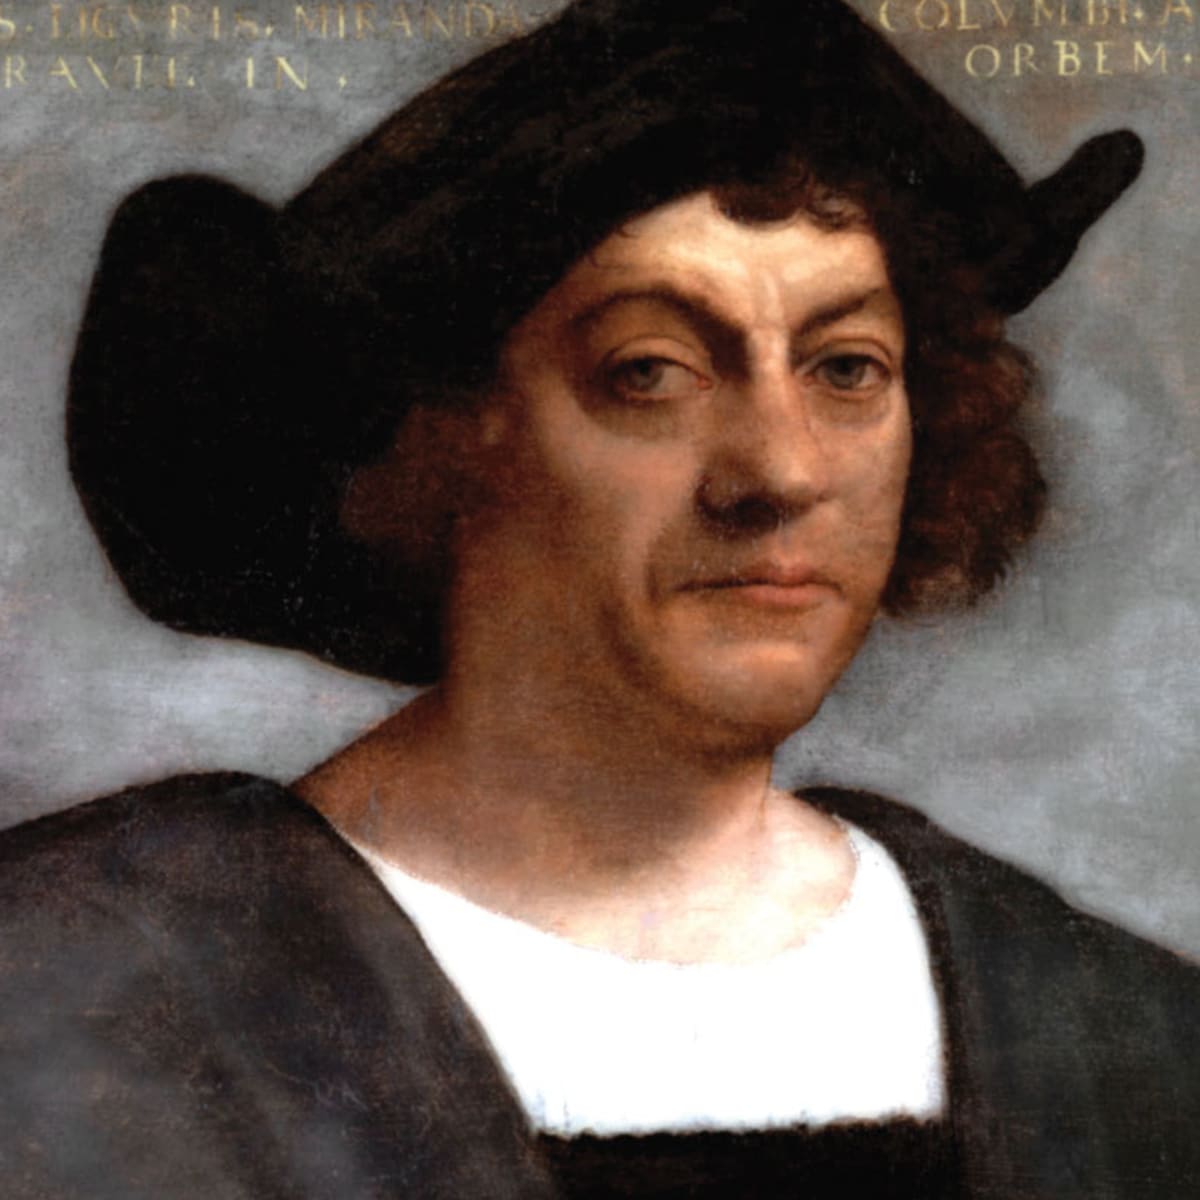 File:Christopher Columbus image.jpg